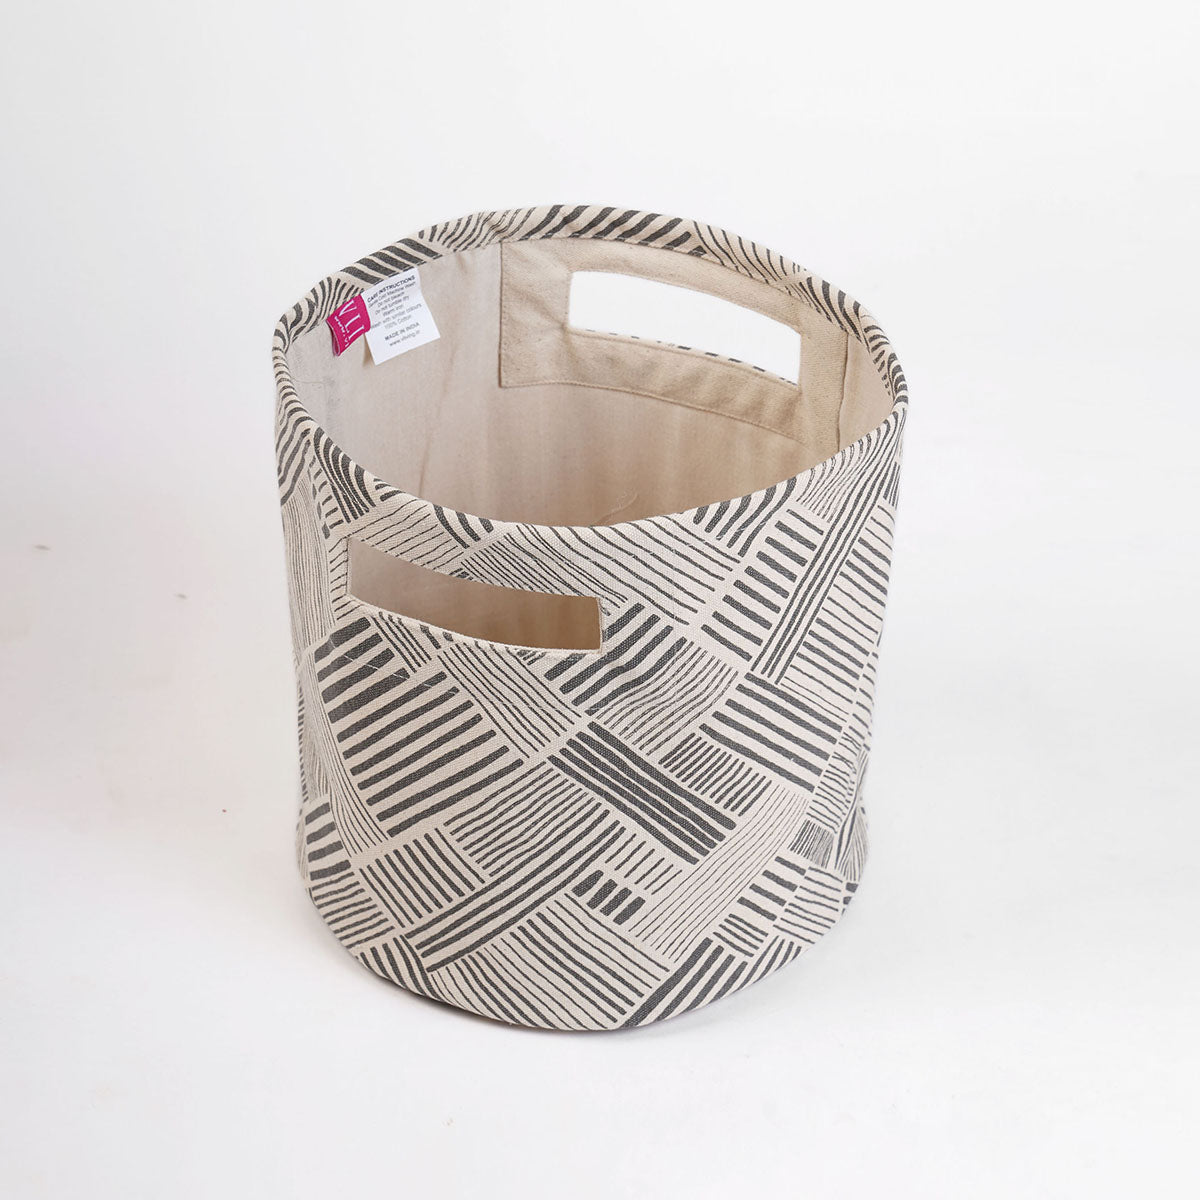 MODERN RETRO - Canvas basket, grey stipe print, storage basket, fabric bin, sizes available